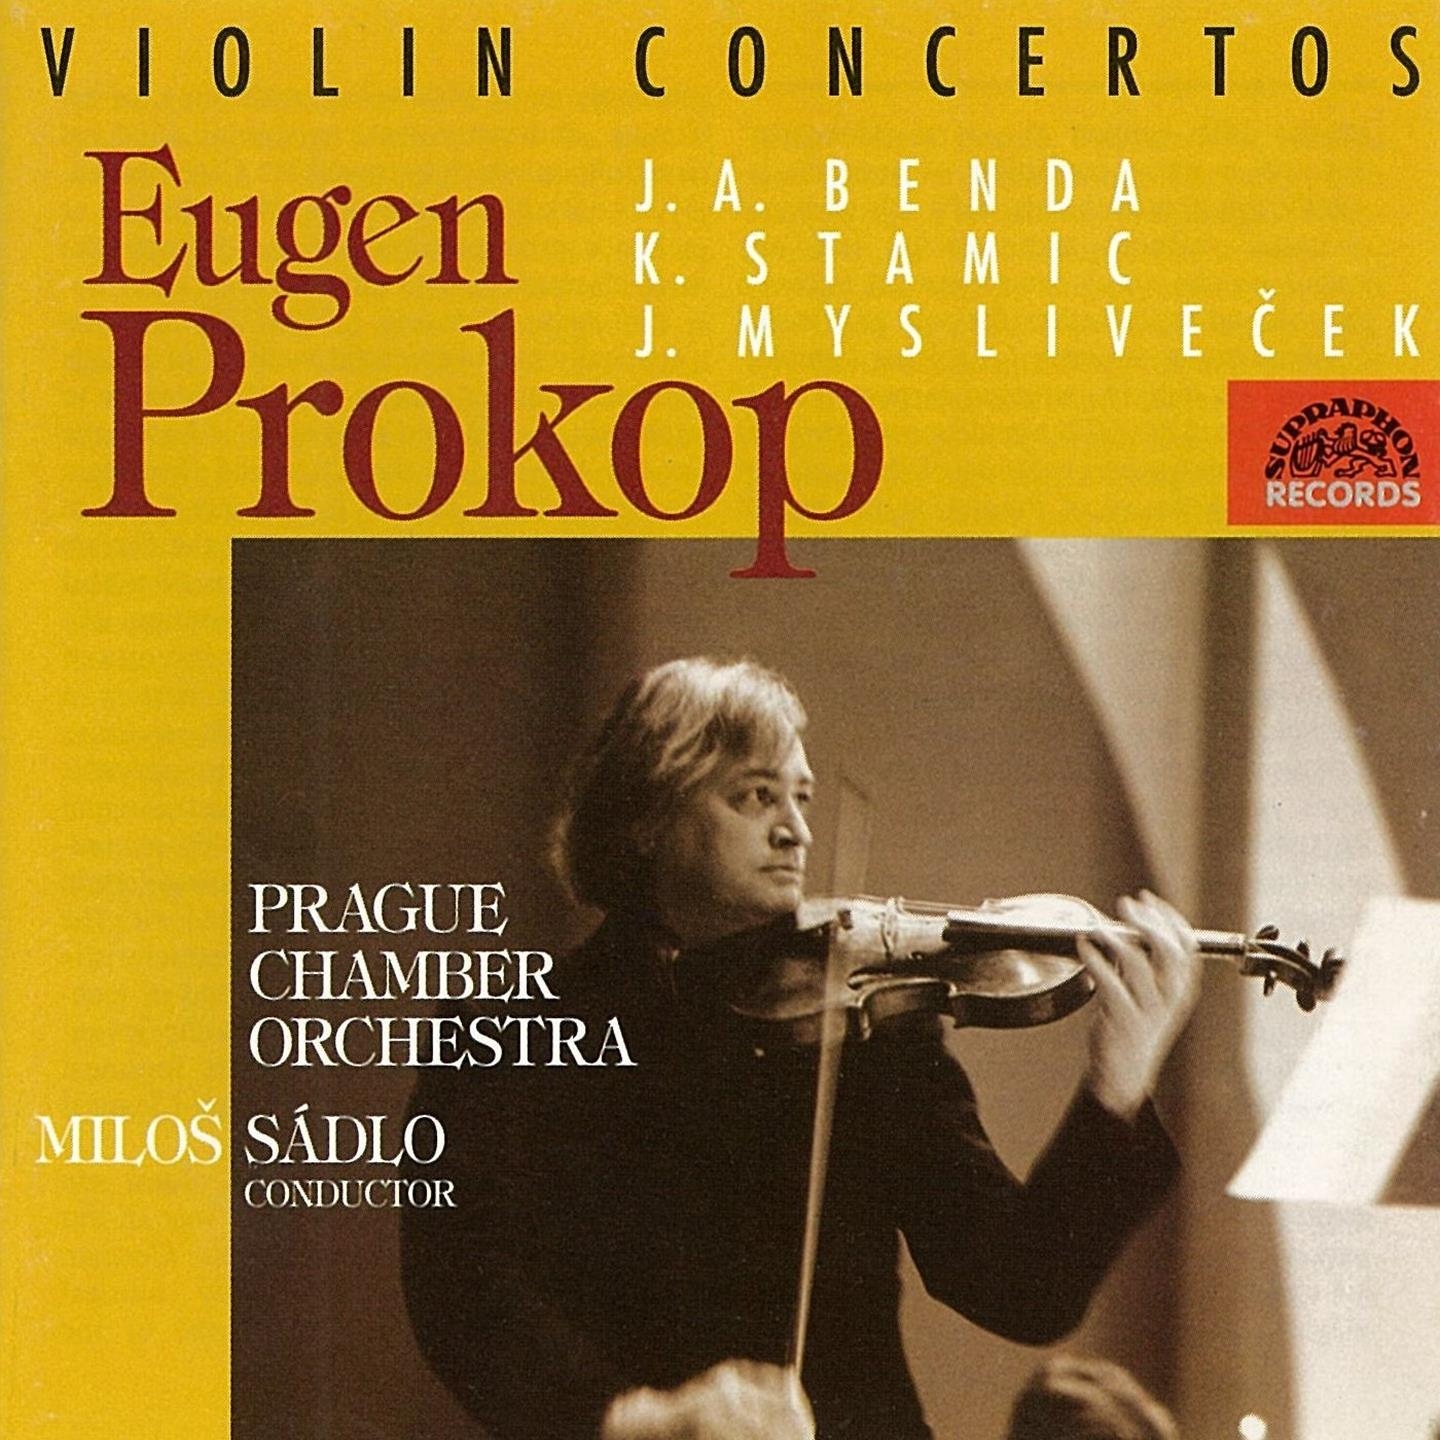 Stamitz, Benda, Myslive ek: Violin Concertos